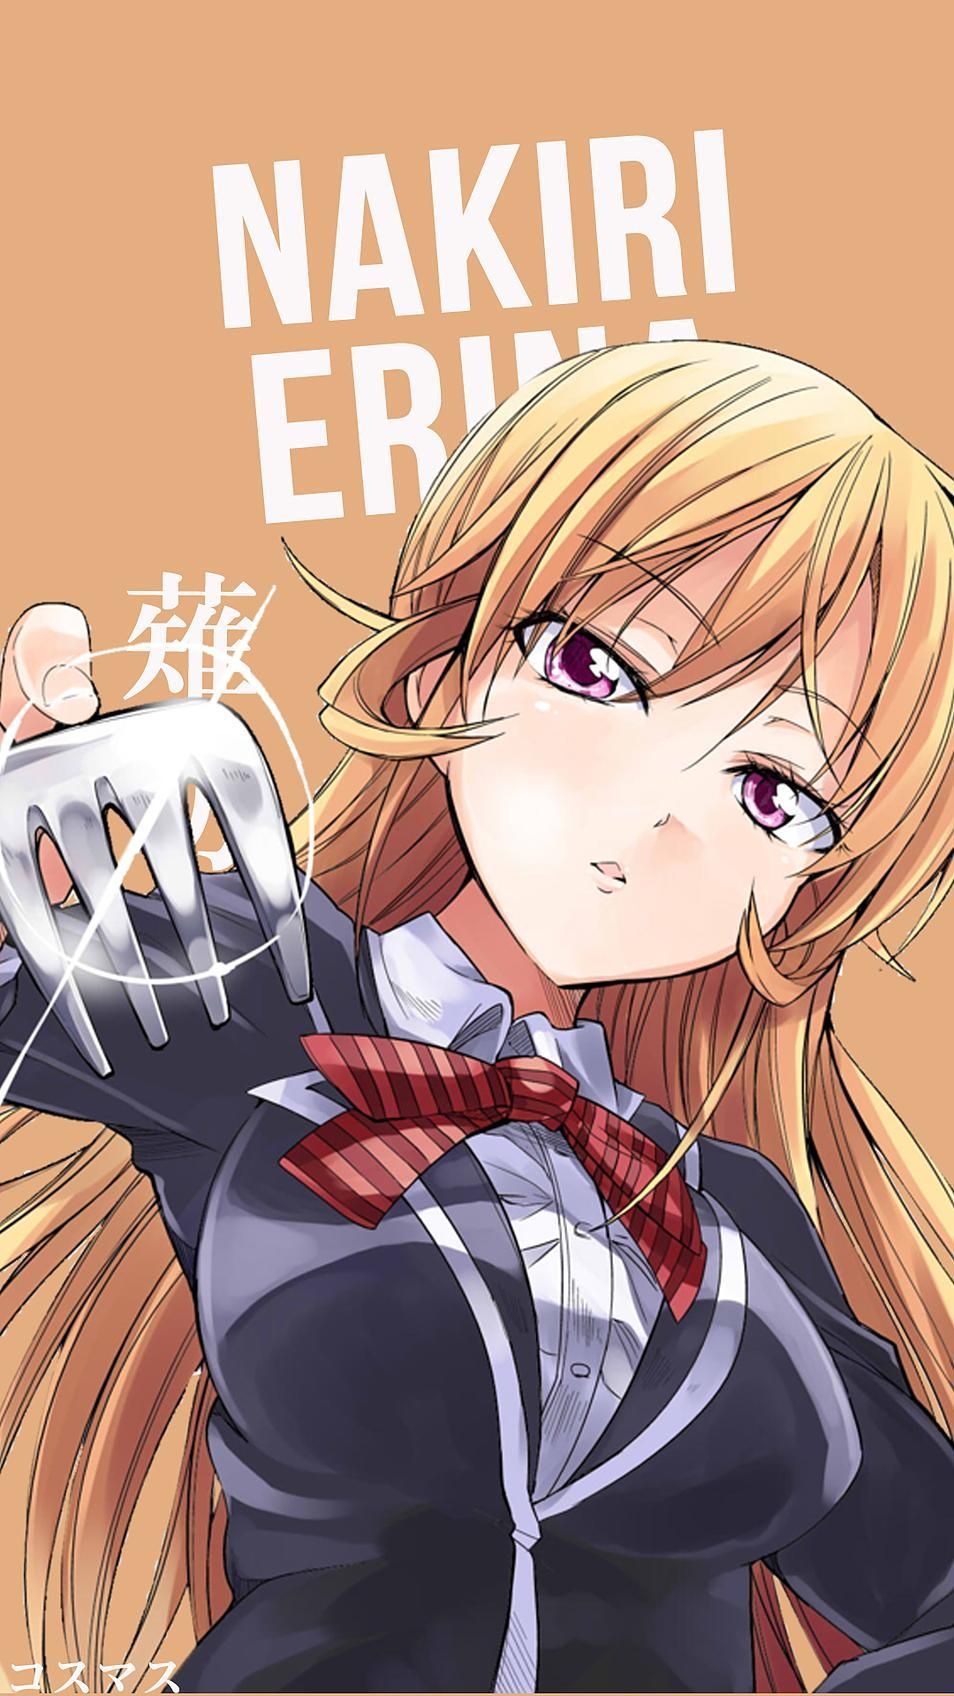 Nakiri Erina. Anime, Anime character names, Kawaii anime